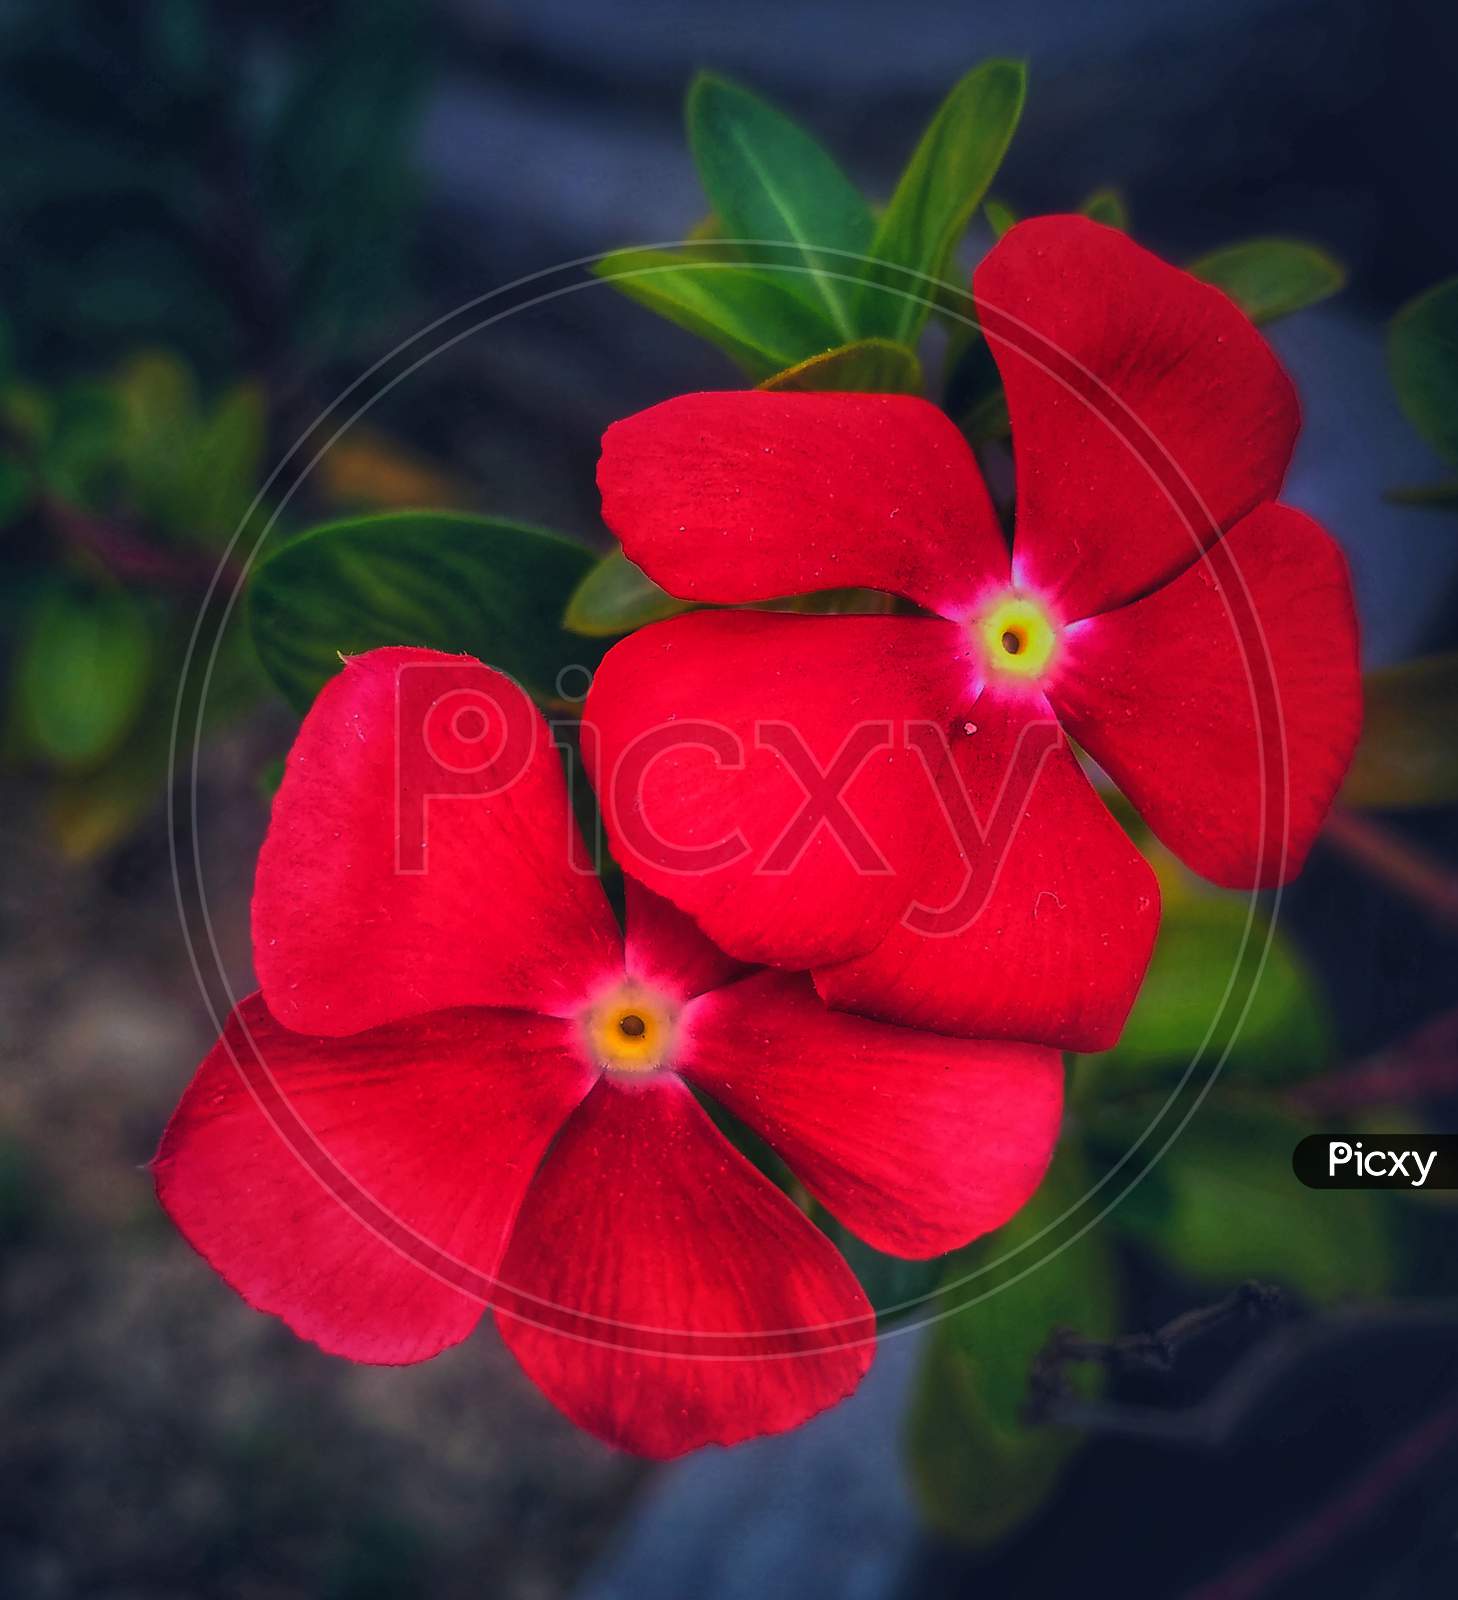 Periwinkle flower.